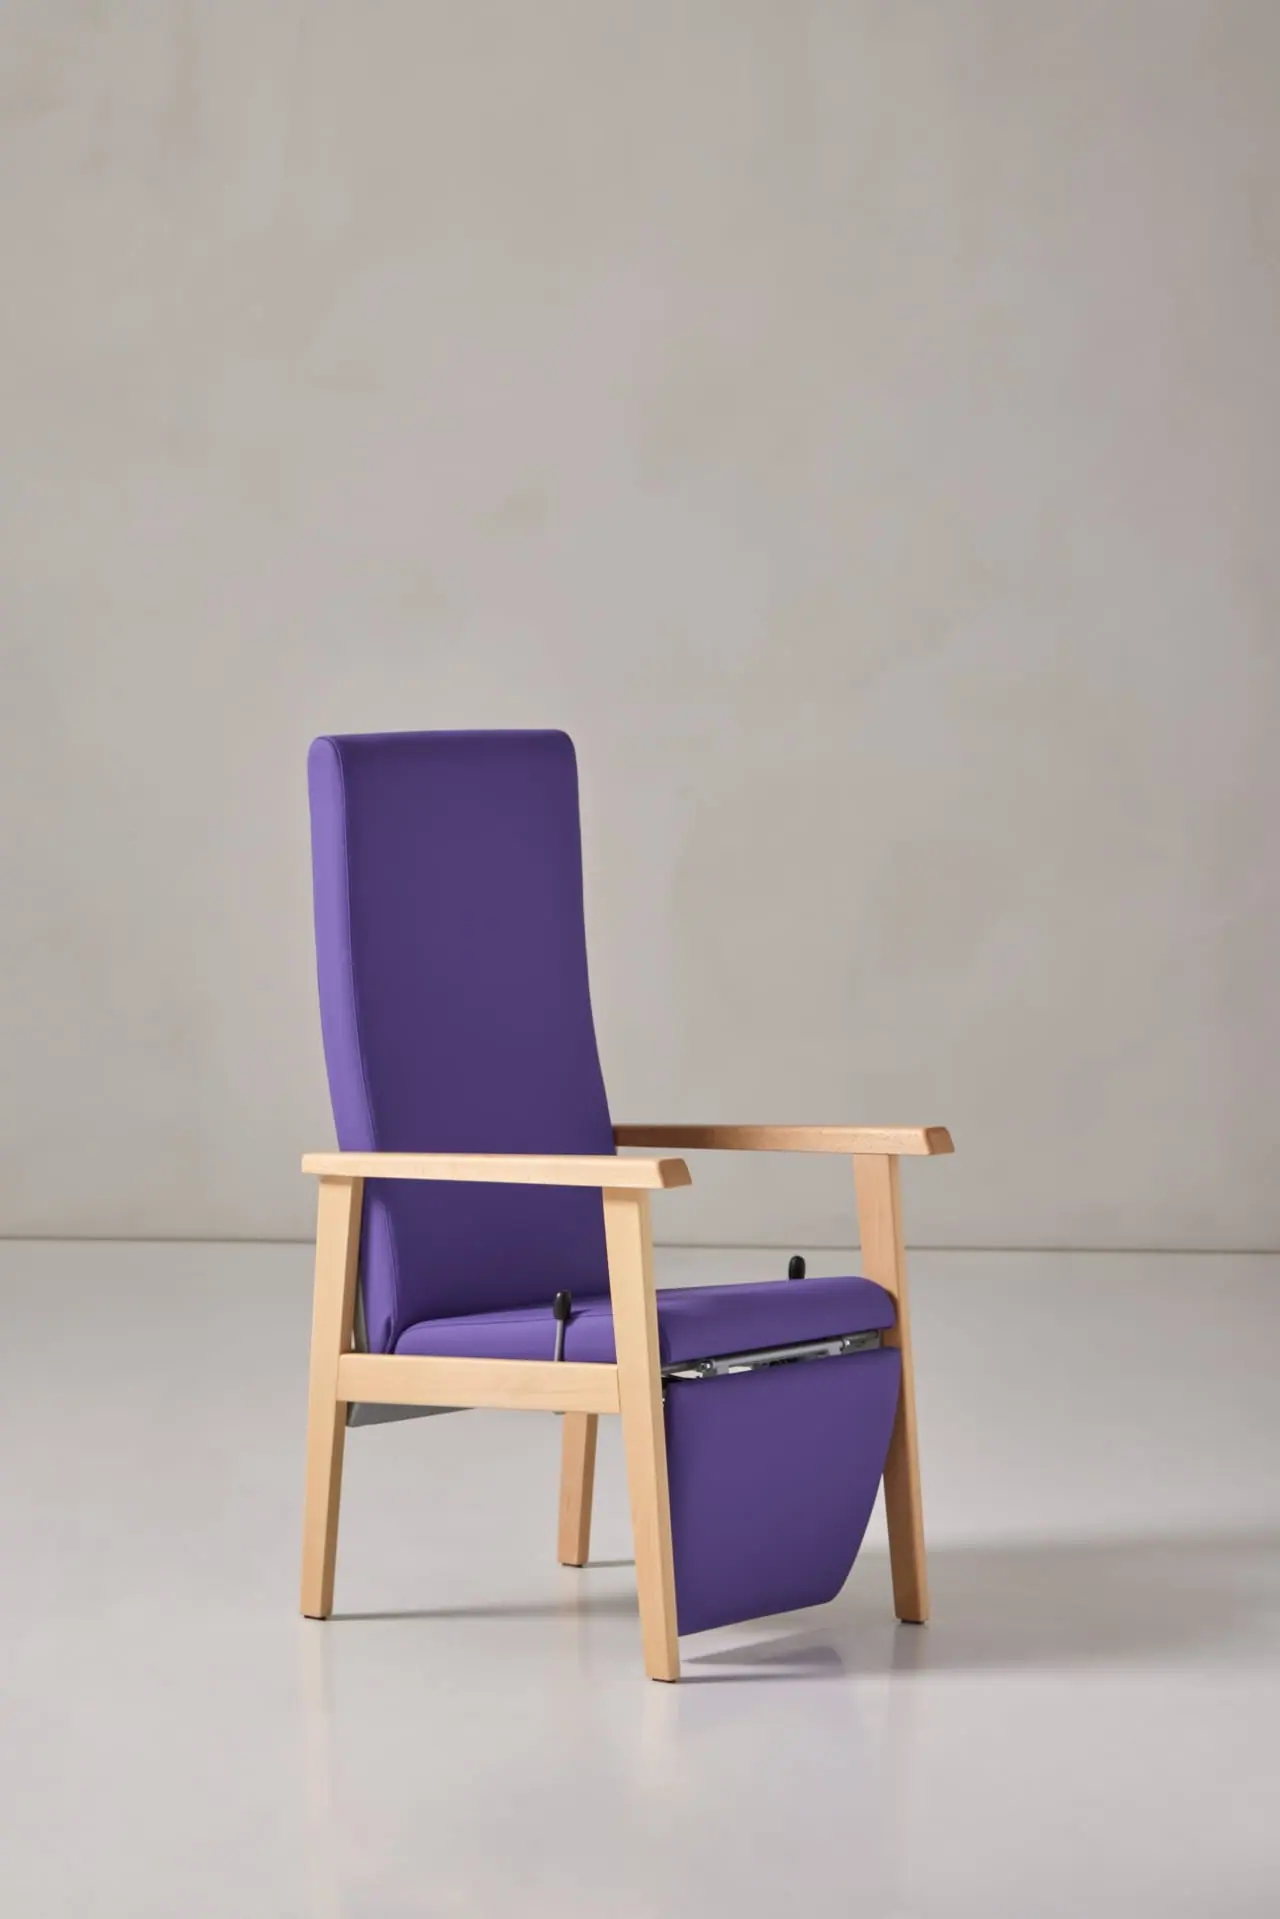 seniorcare-madison-lounge-chairs-03